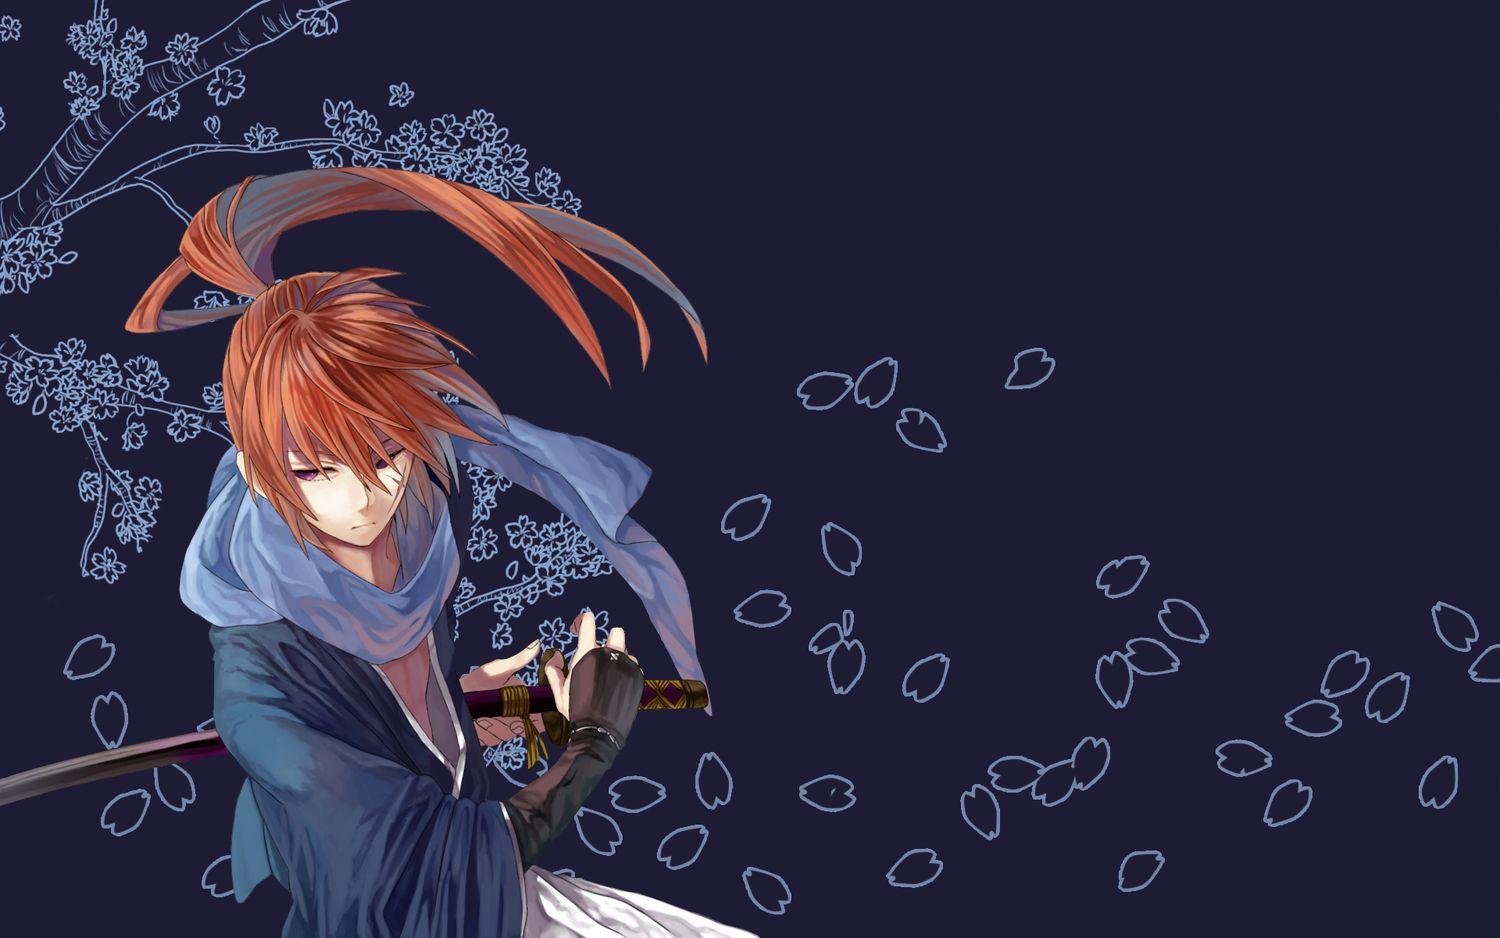 Papeis de parede Rurouni Kenshin Beijo Anime baixar imagens